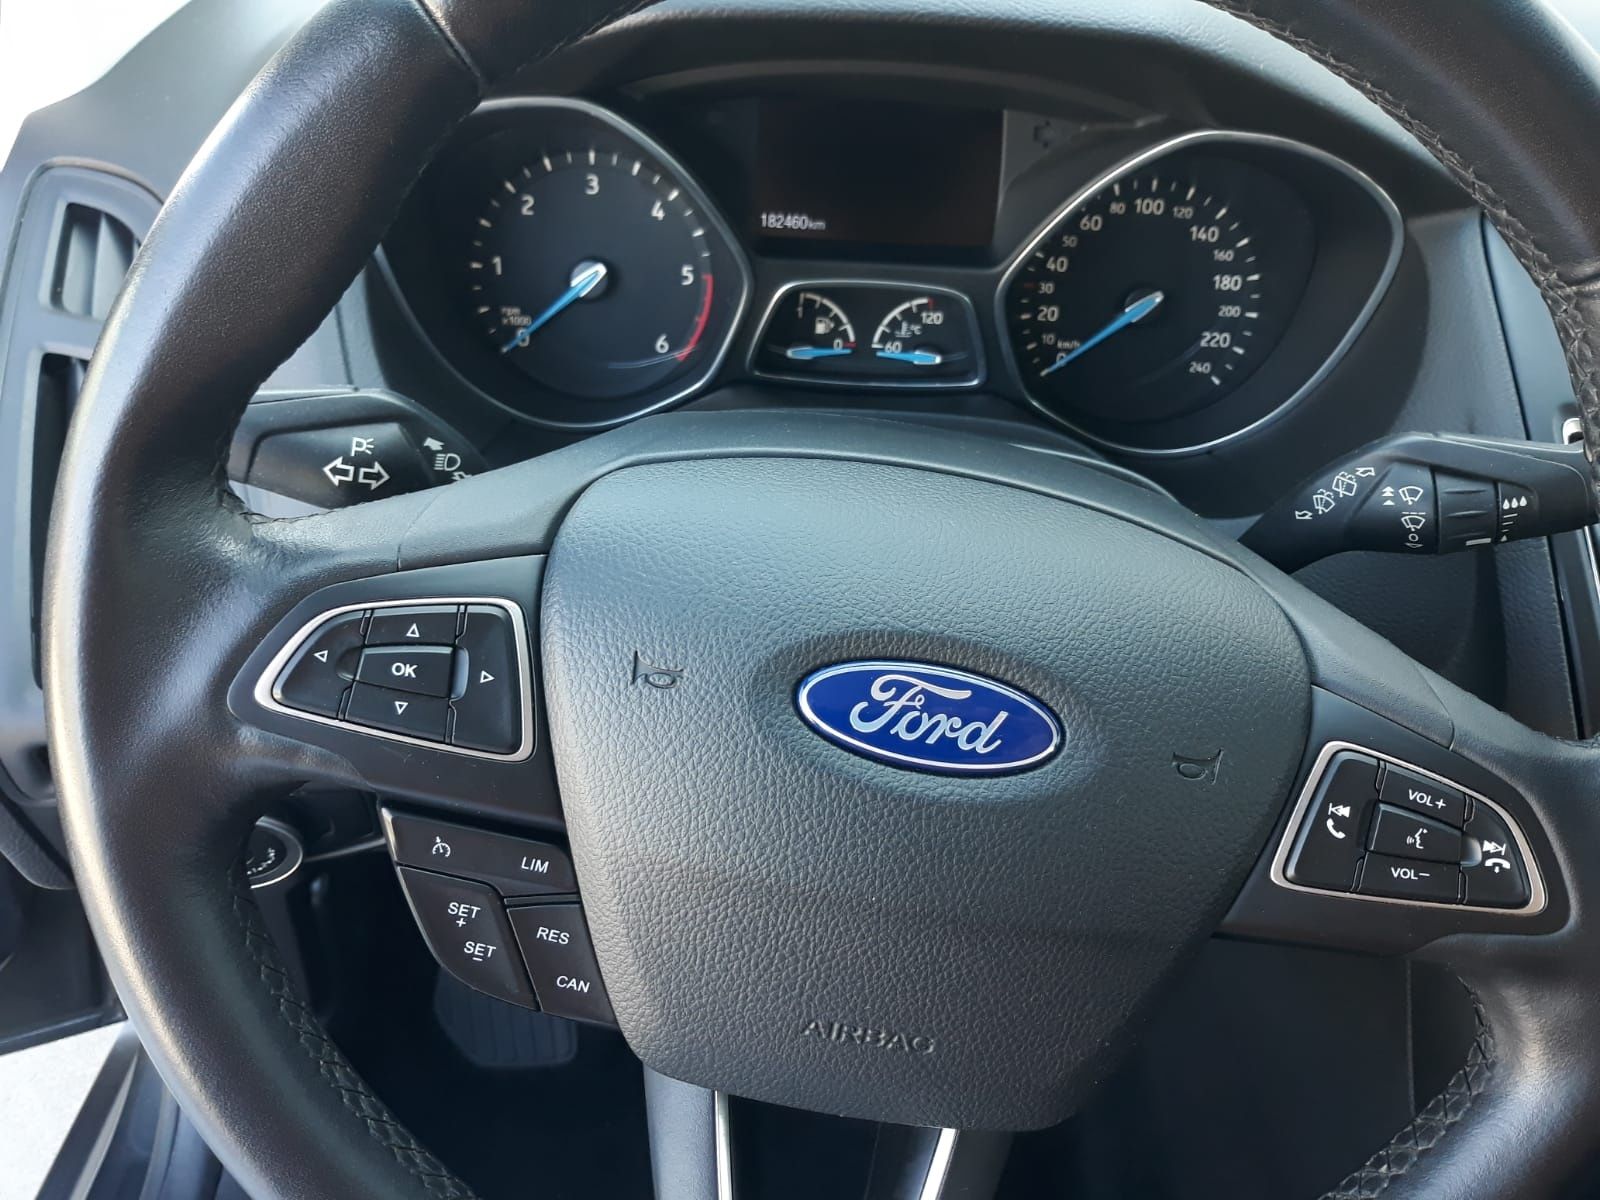 Ford focus, an 2016,motor 1500 diesel, euro 6